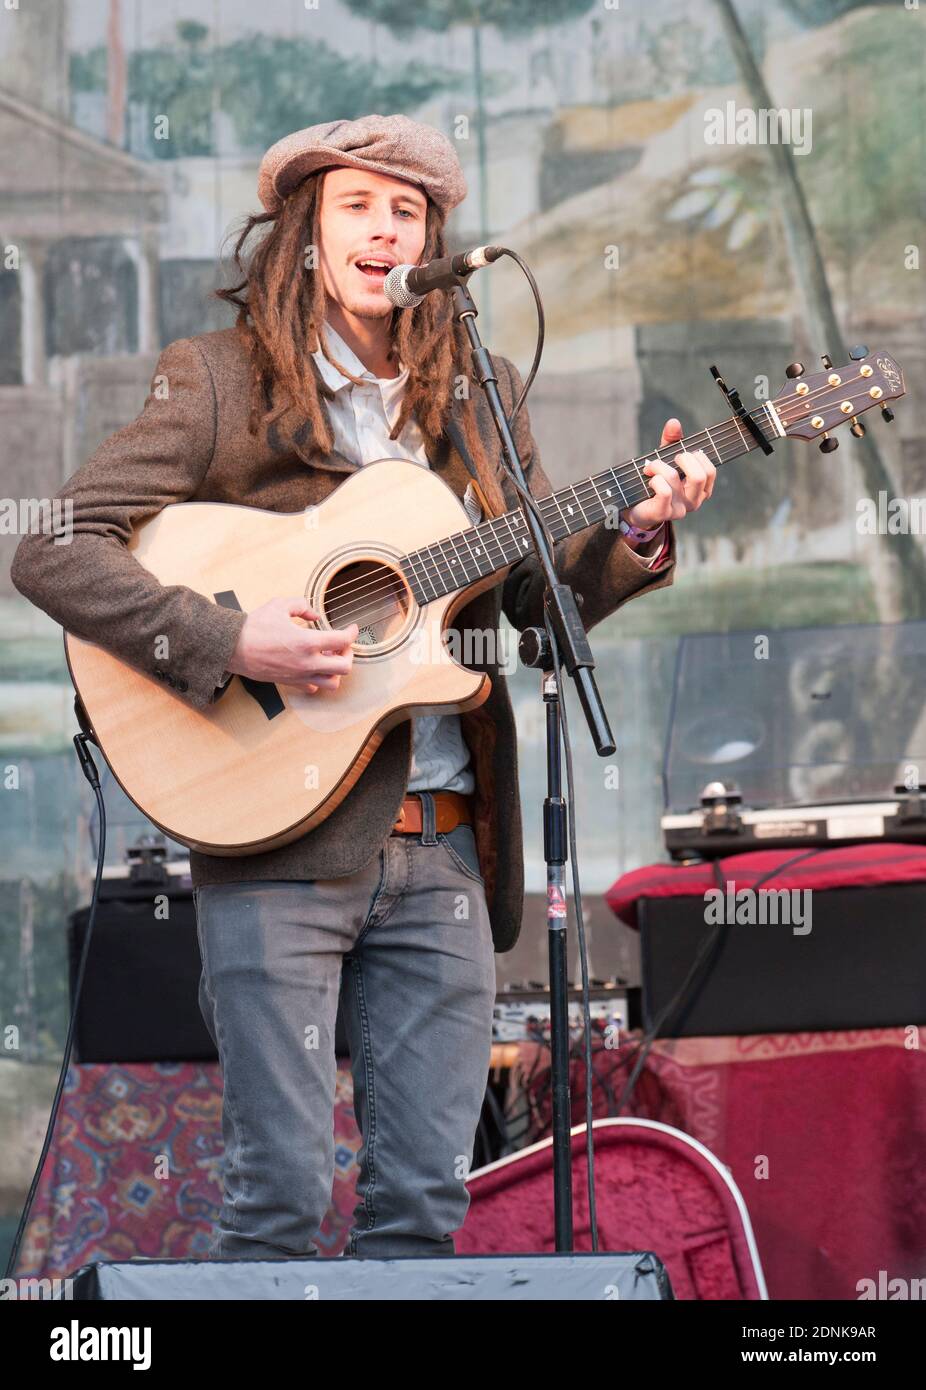 Manchester based musician JP Cooper performing at the Larmer Tree festival, UK Stock Photo